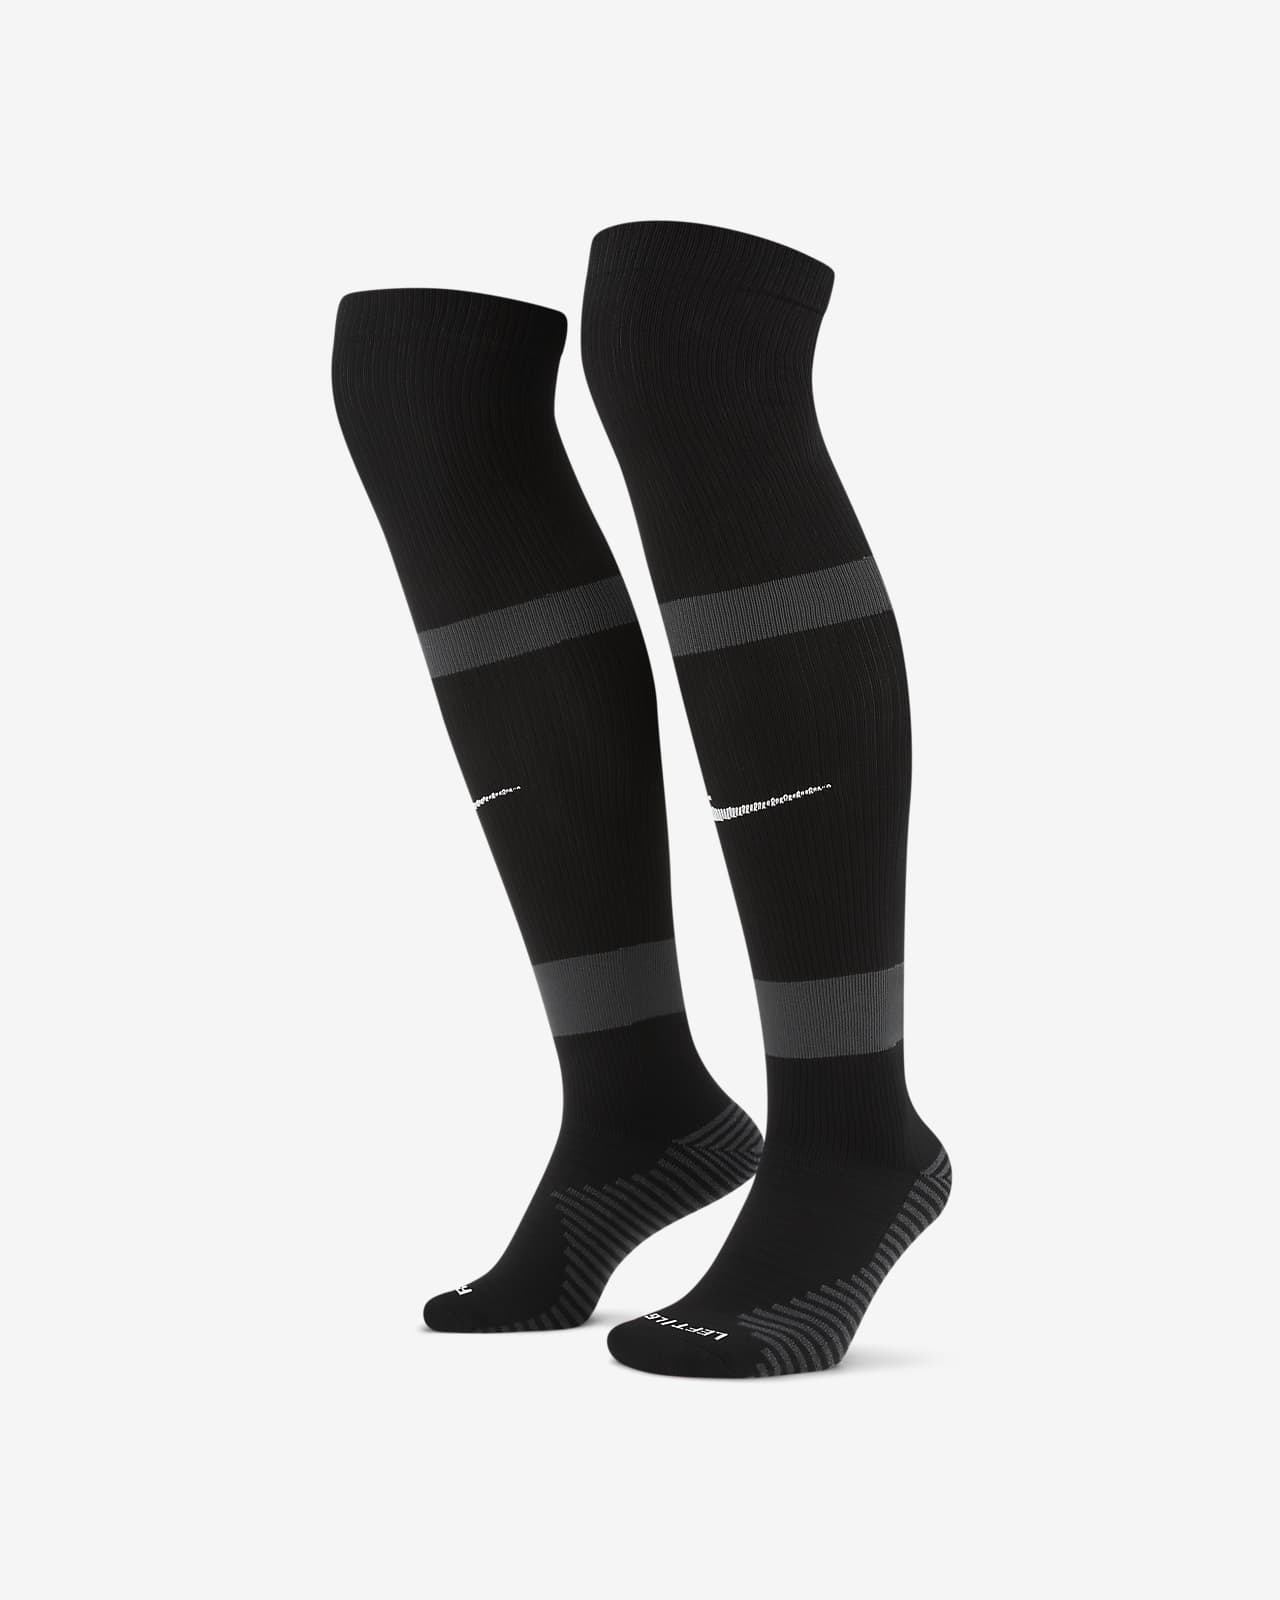 Nike MatchFit Football Knee-High Socks. Nike HR